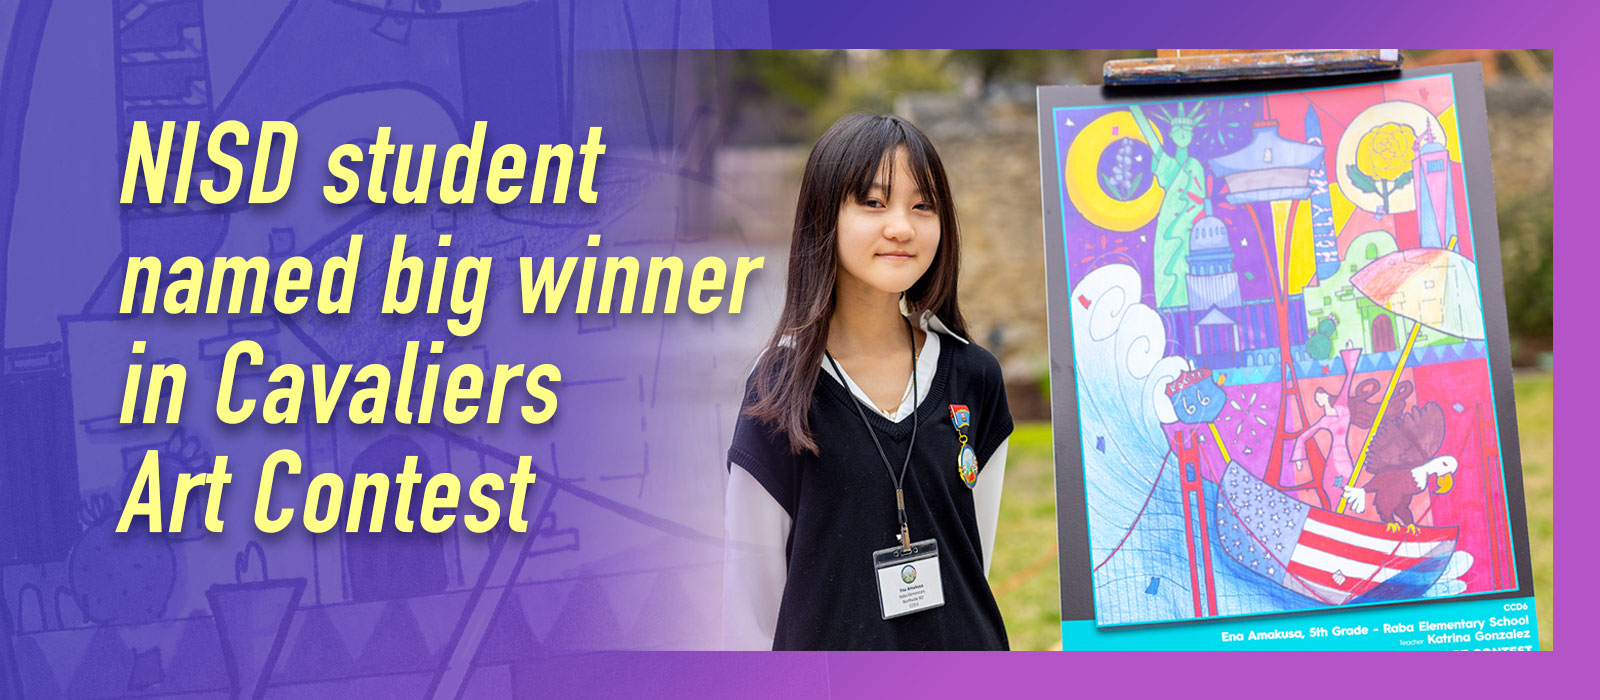 NISD student named big winner in Cavaliers Art Contest